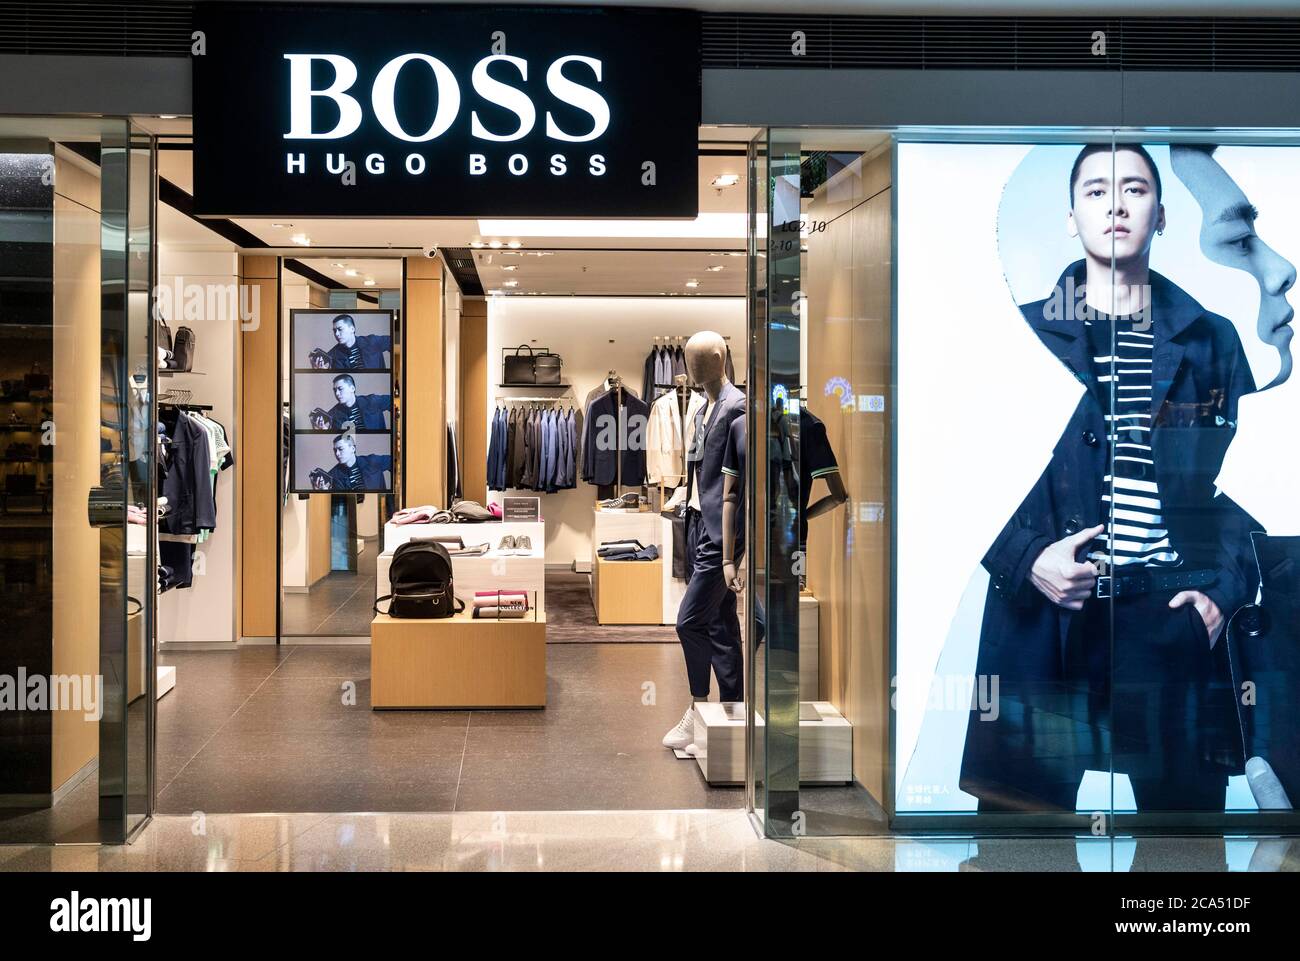 hugo boss clothing line